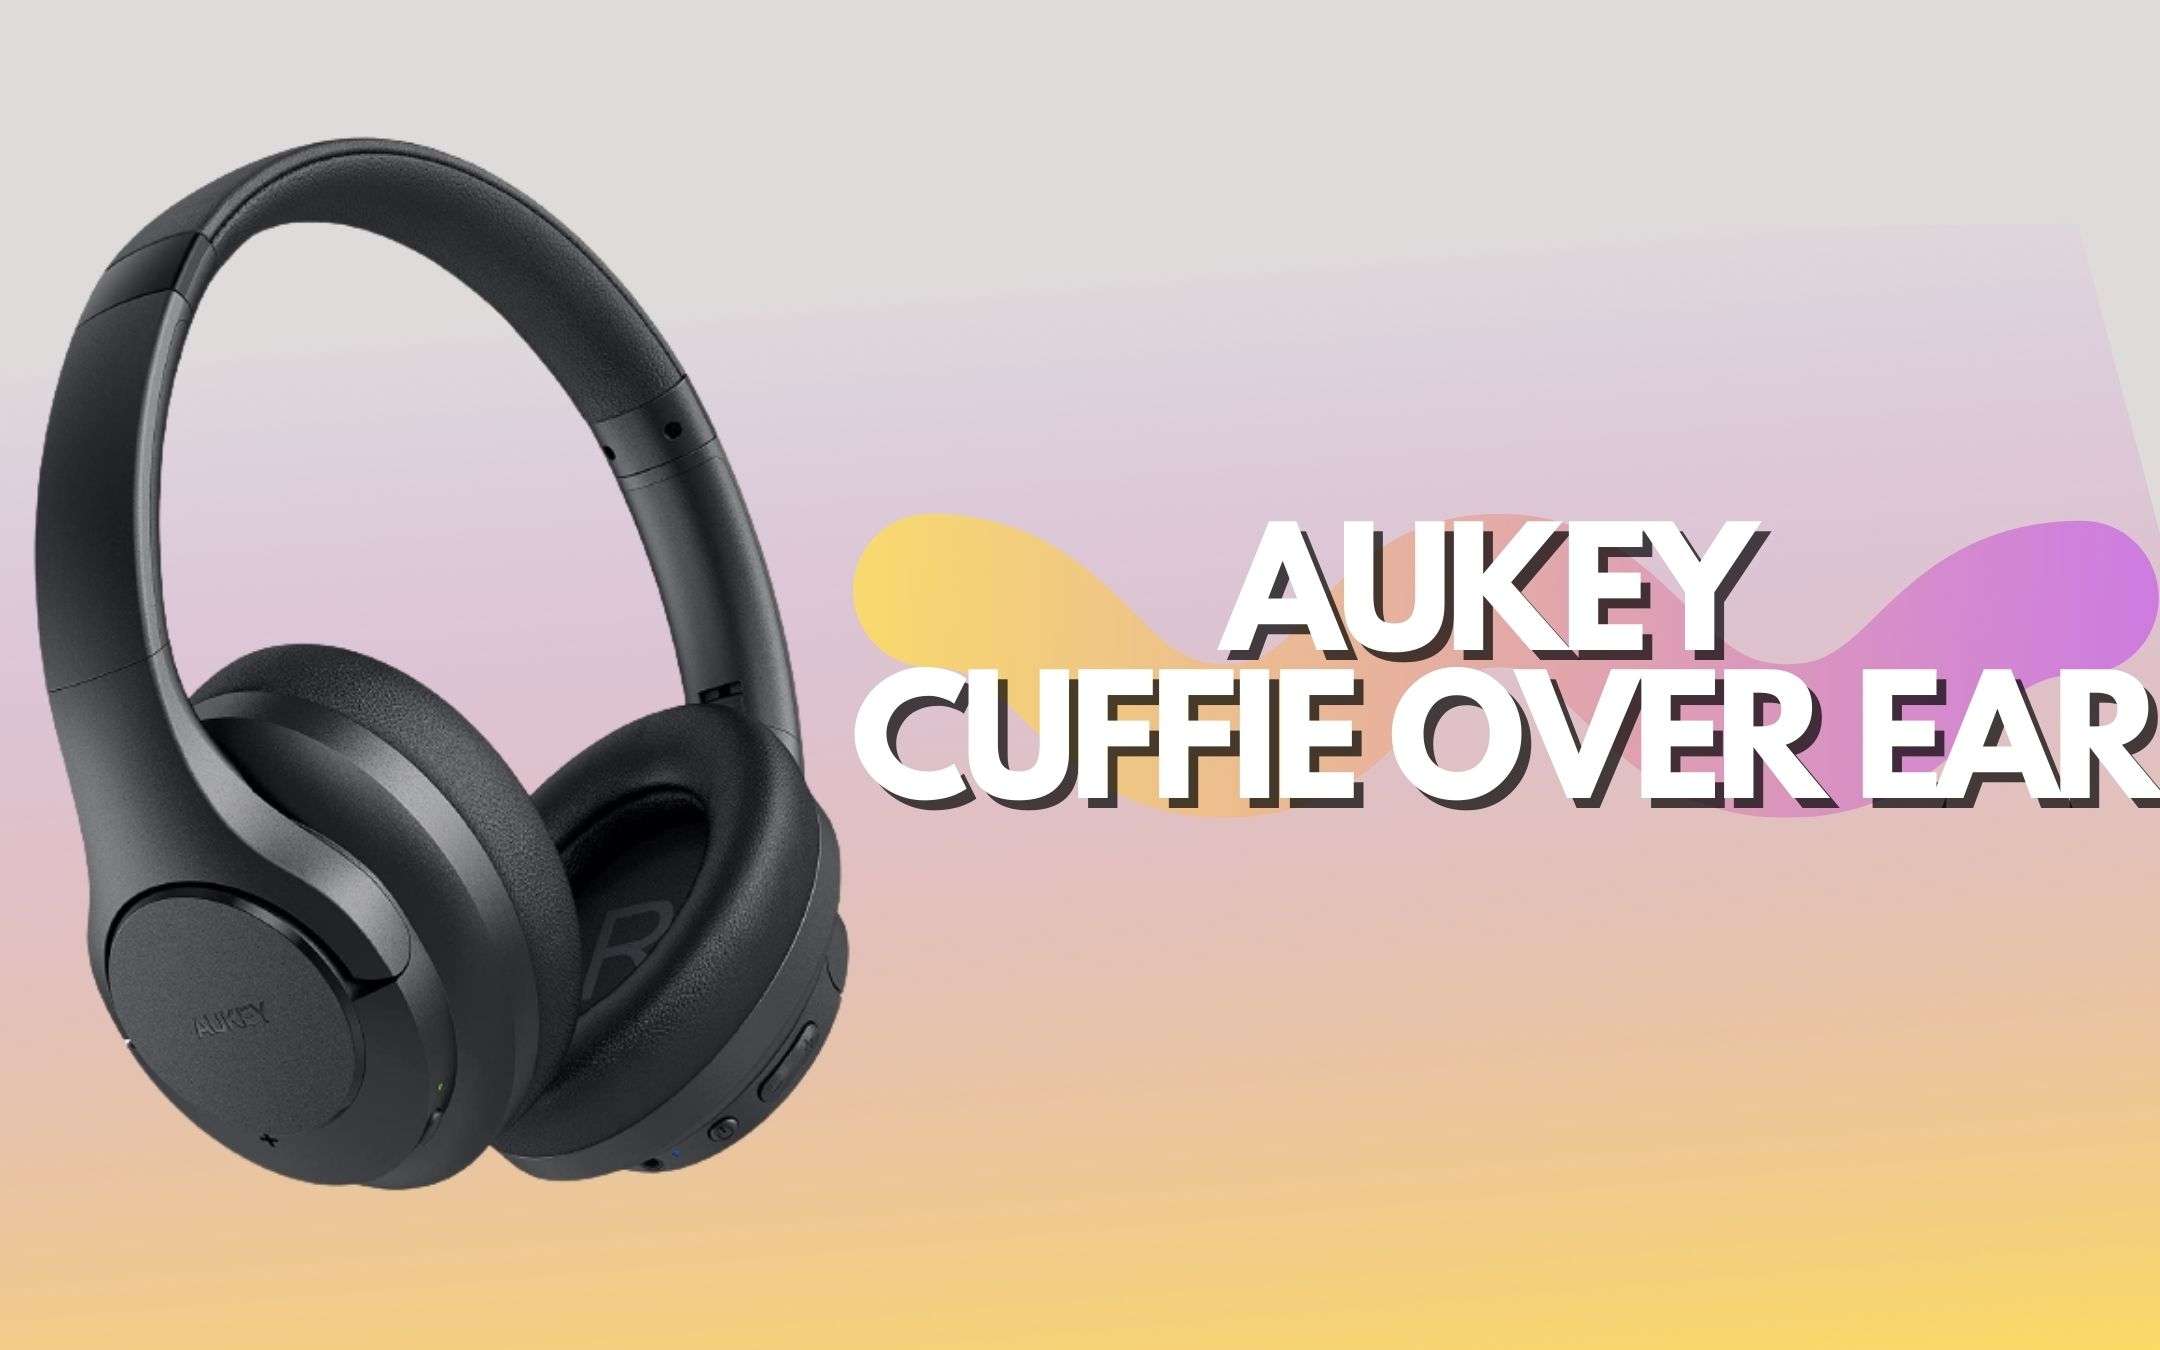 Aukey: favolose cuffie over ear con coupon di 15€